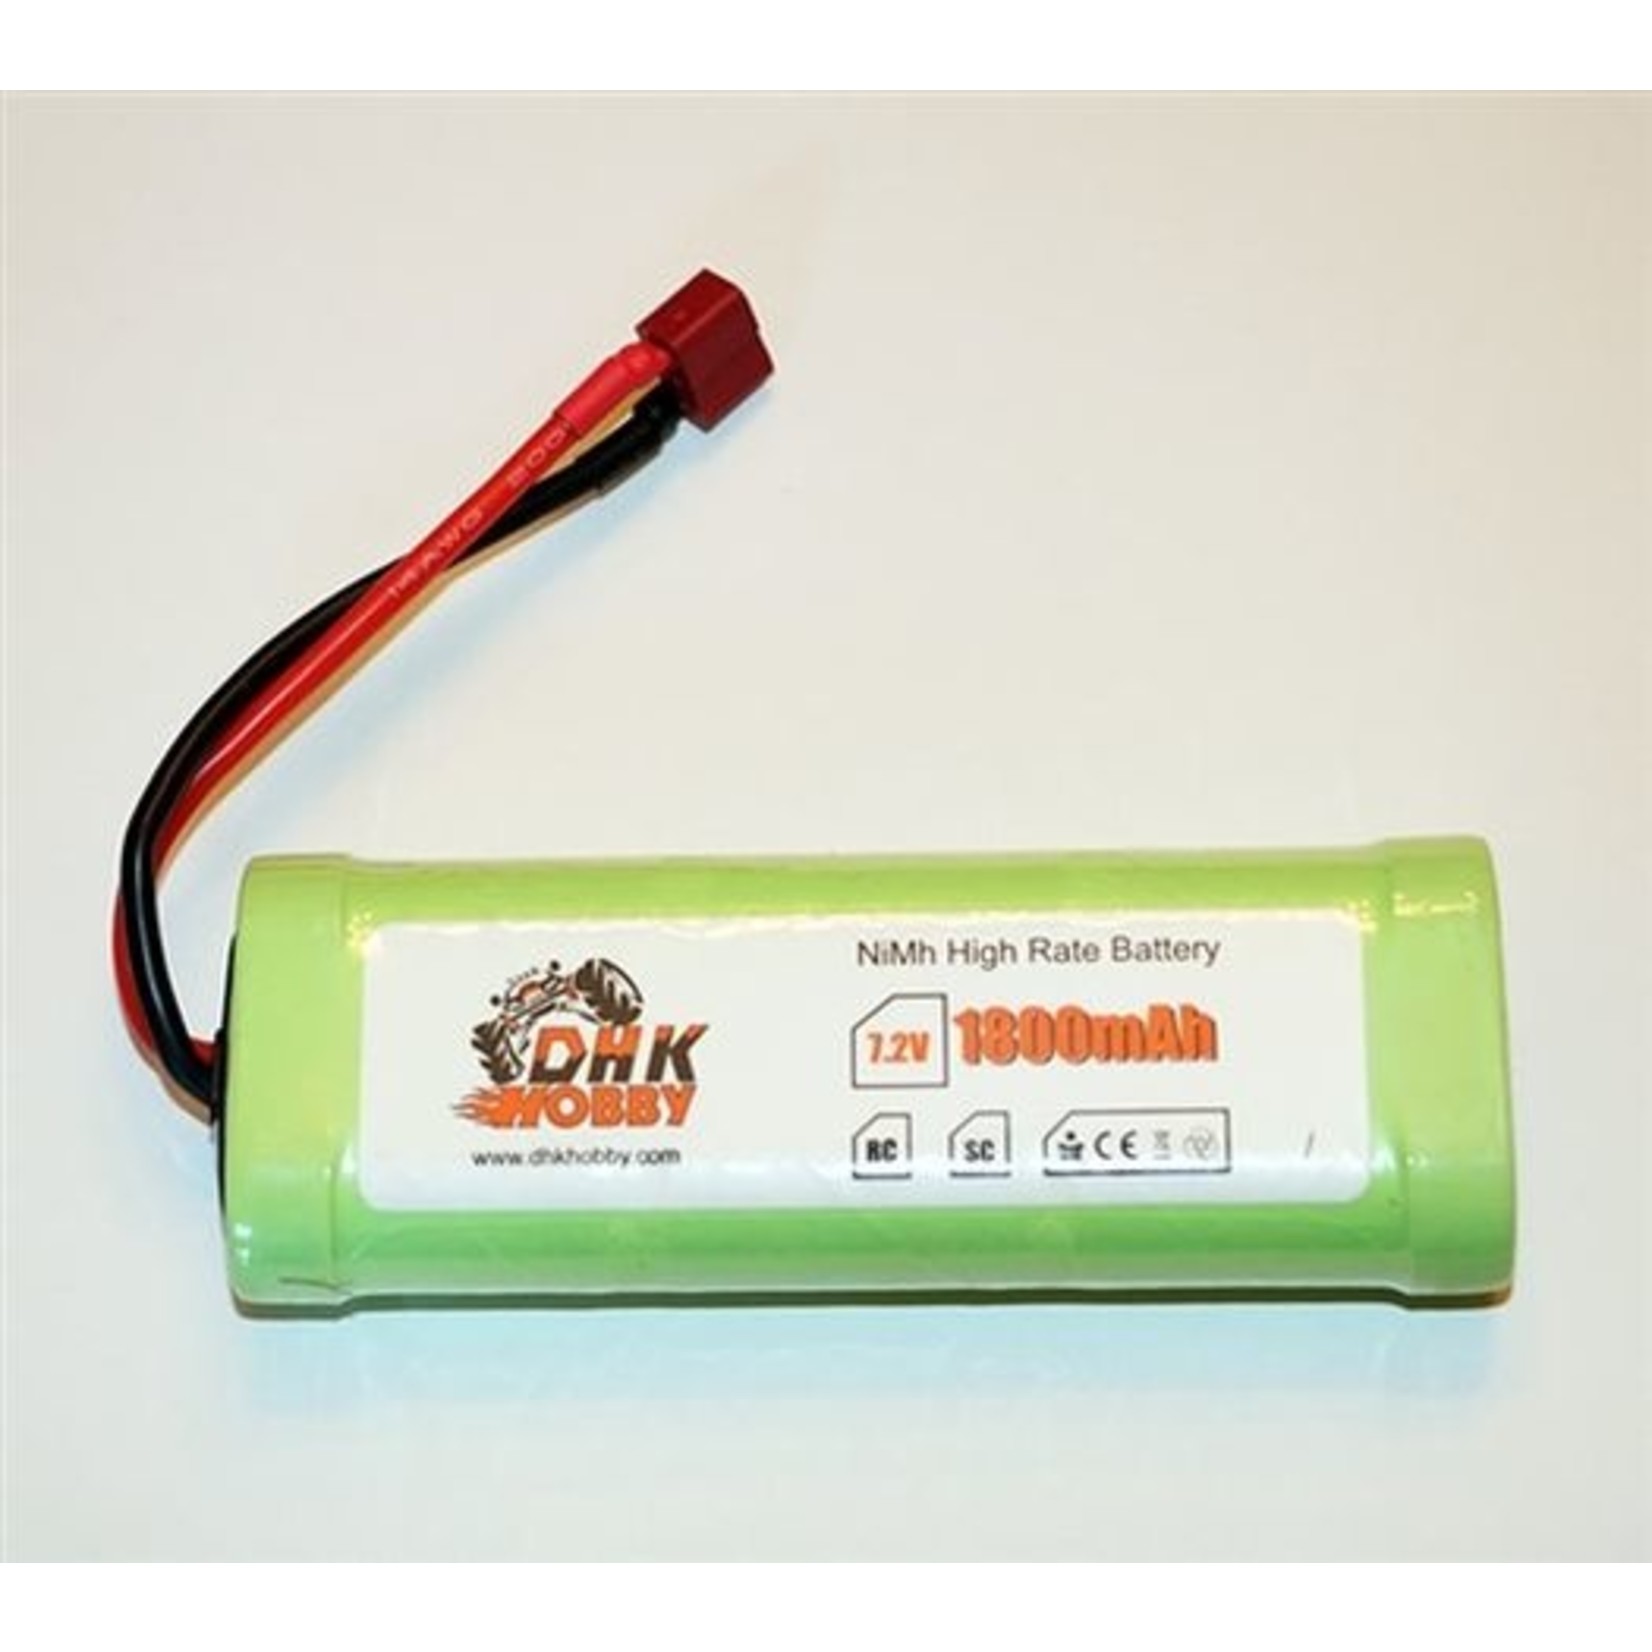 DHK Hobby 7.2V SC 1800mAh NiMh Battery (T-Connector)